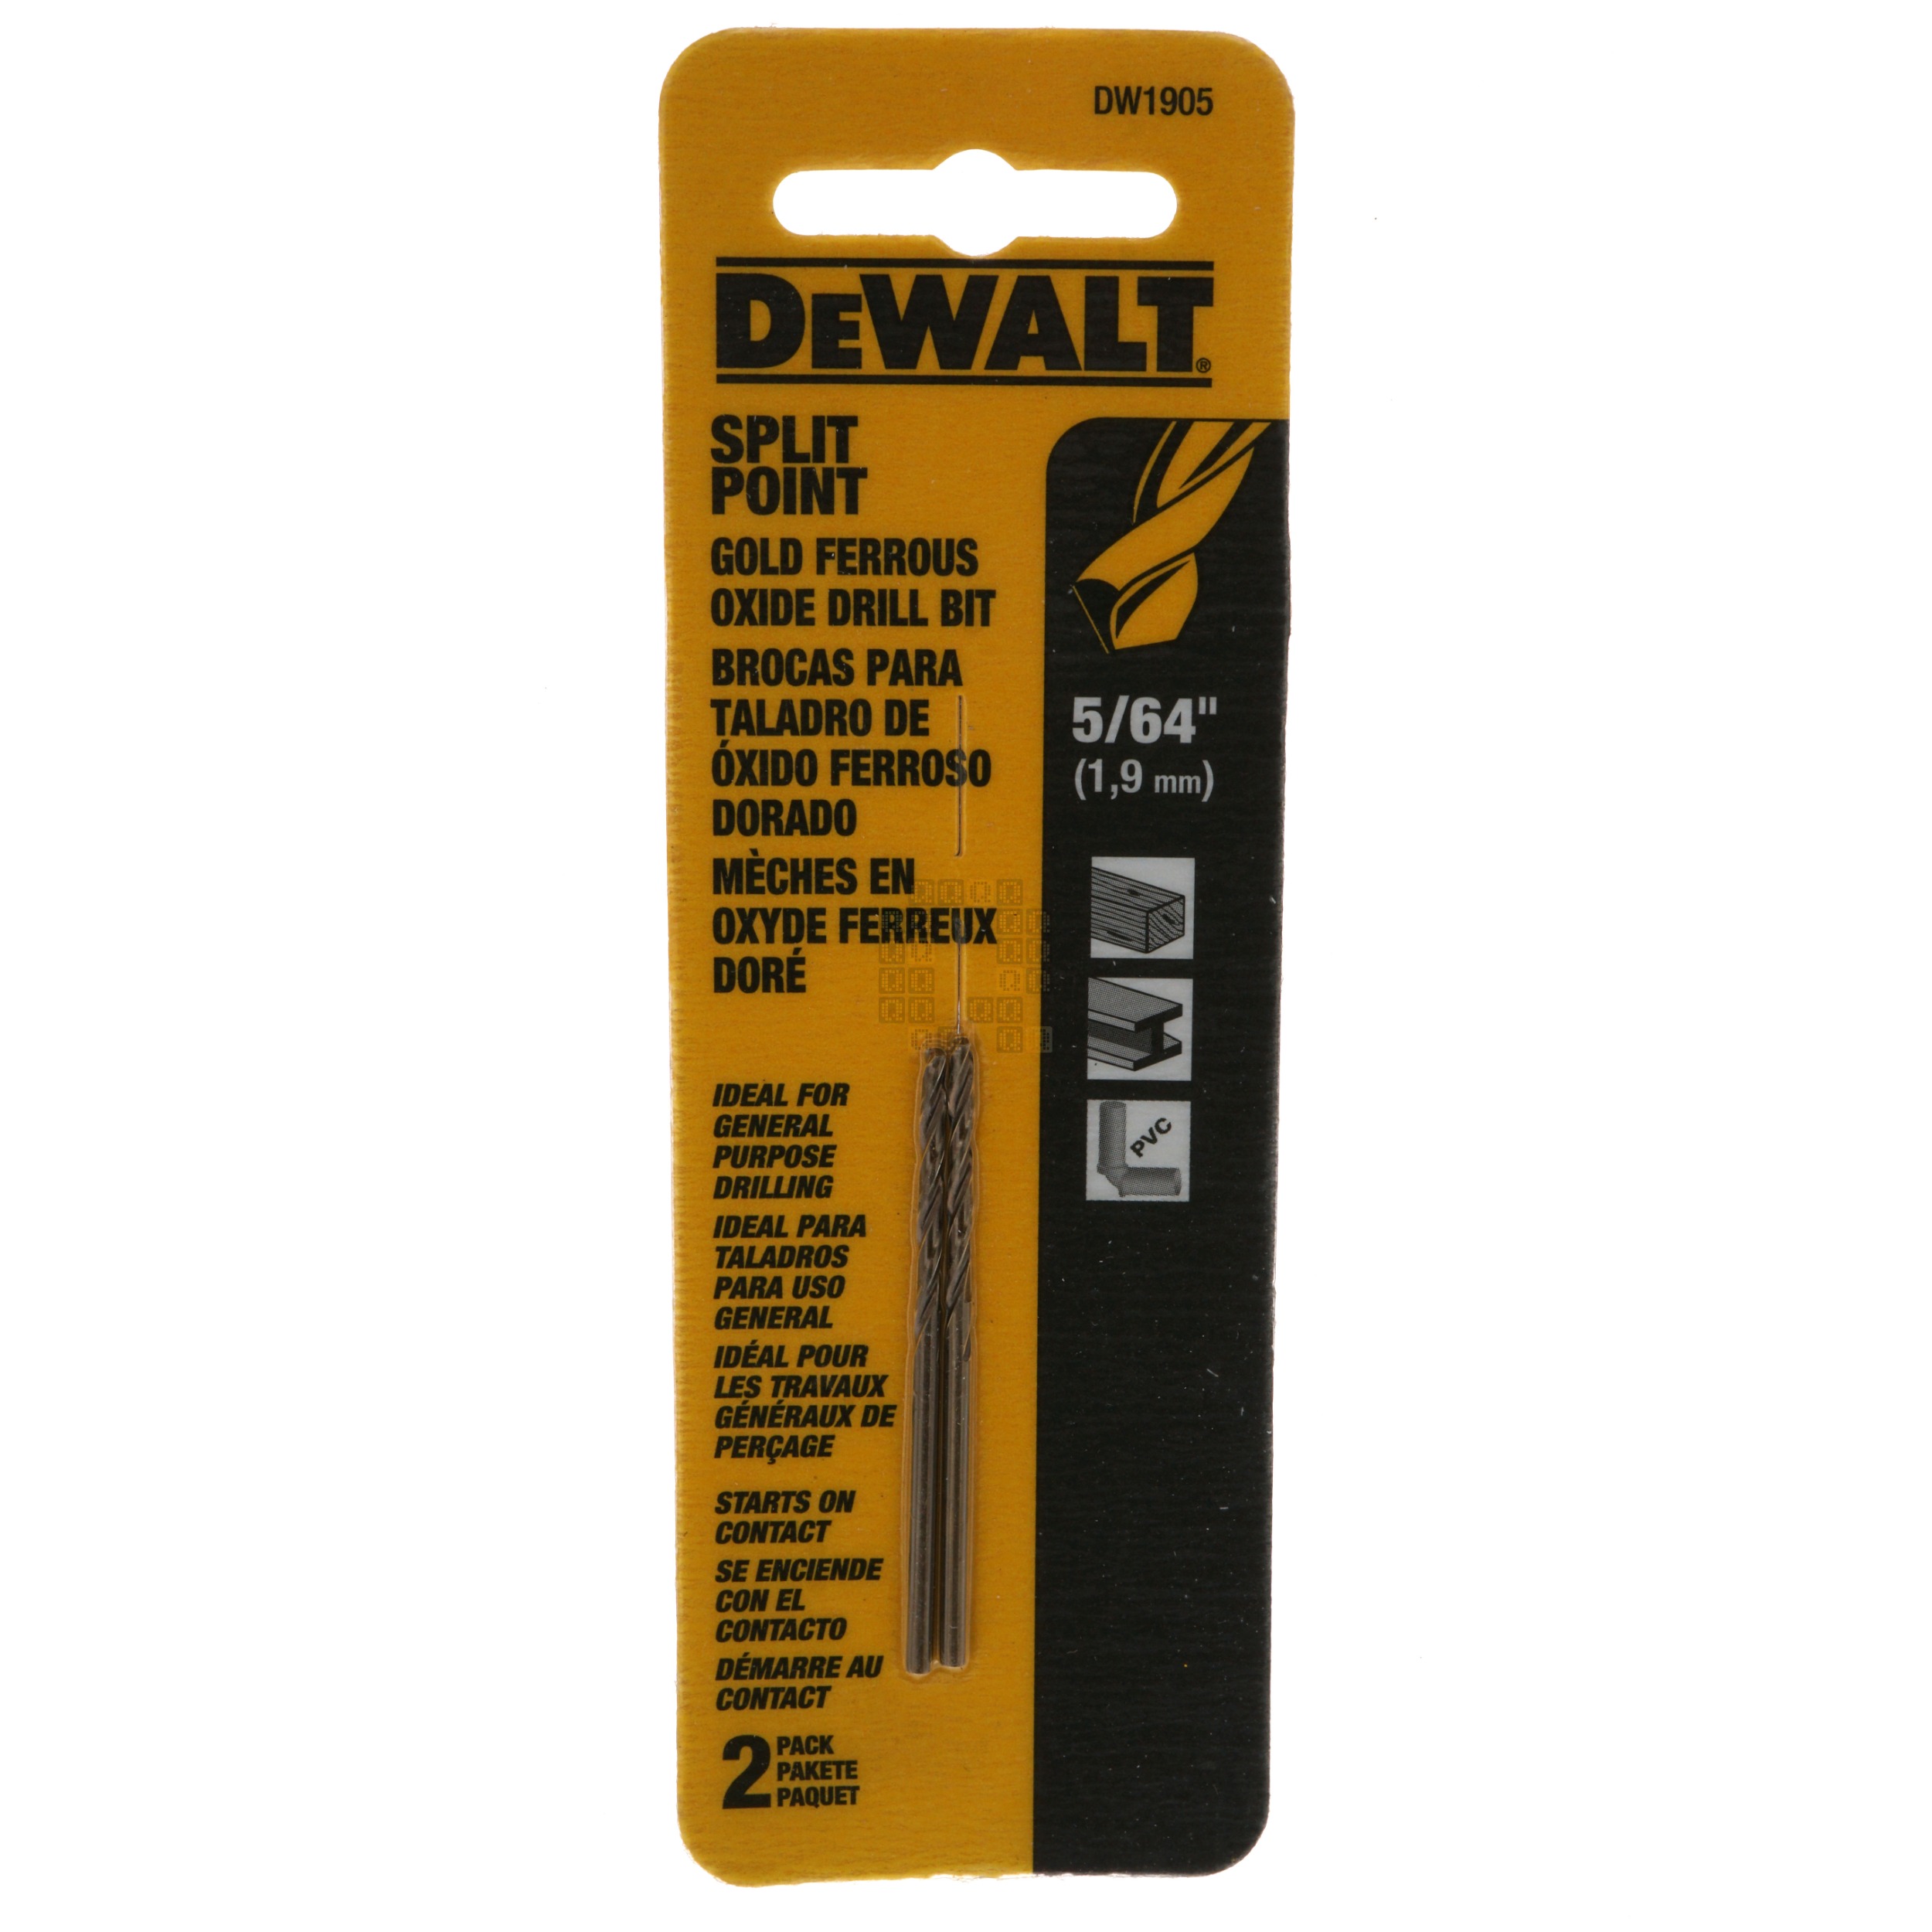 DeWALT DW1905 5/64" Split Point Gold Ferrous Oxide Drill Bit, 2-Pack